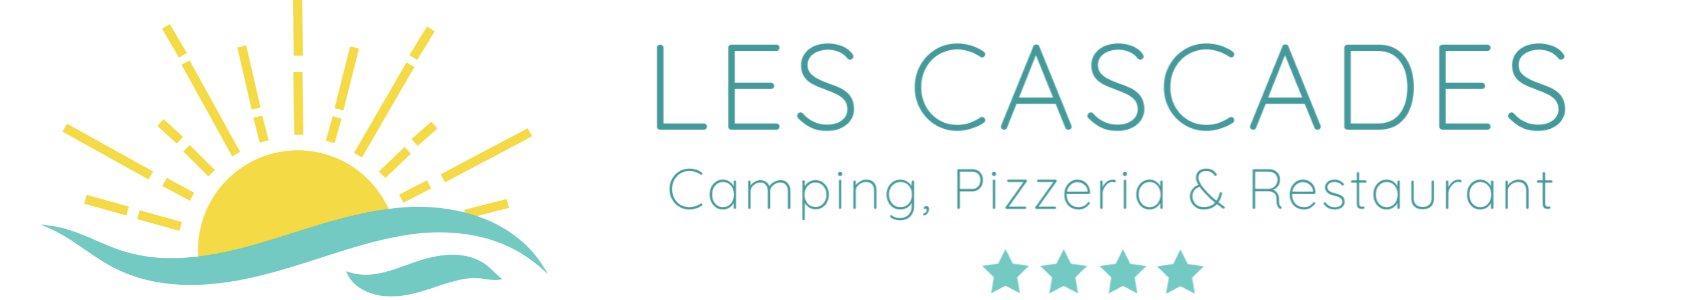 logo de Yelloh Village Les Cascades